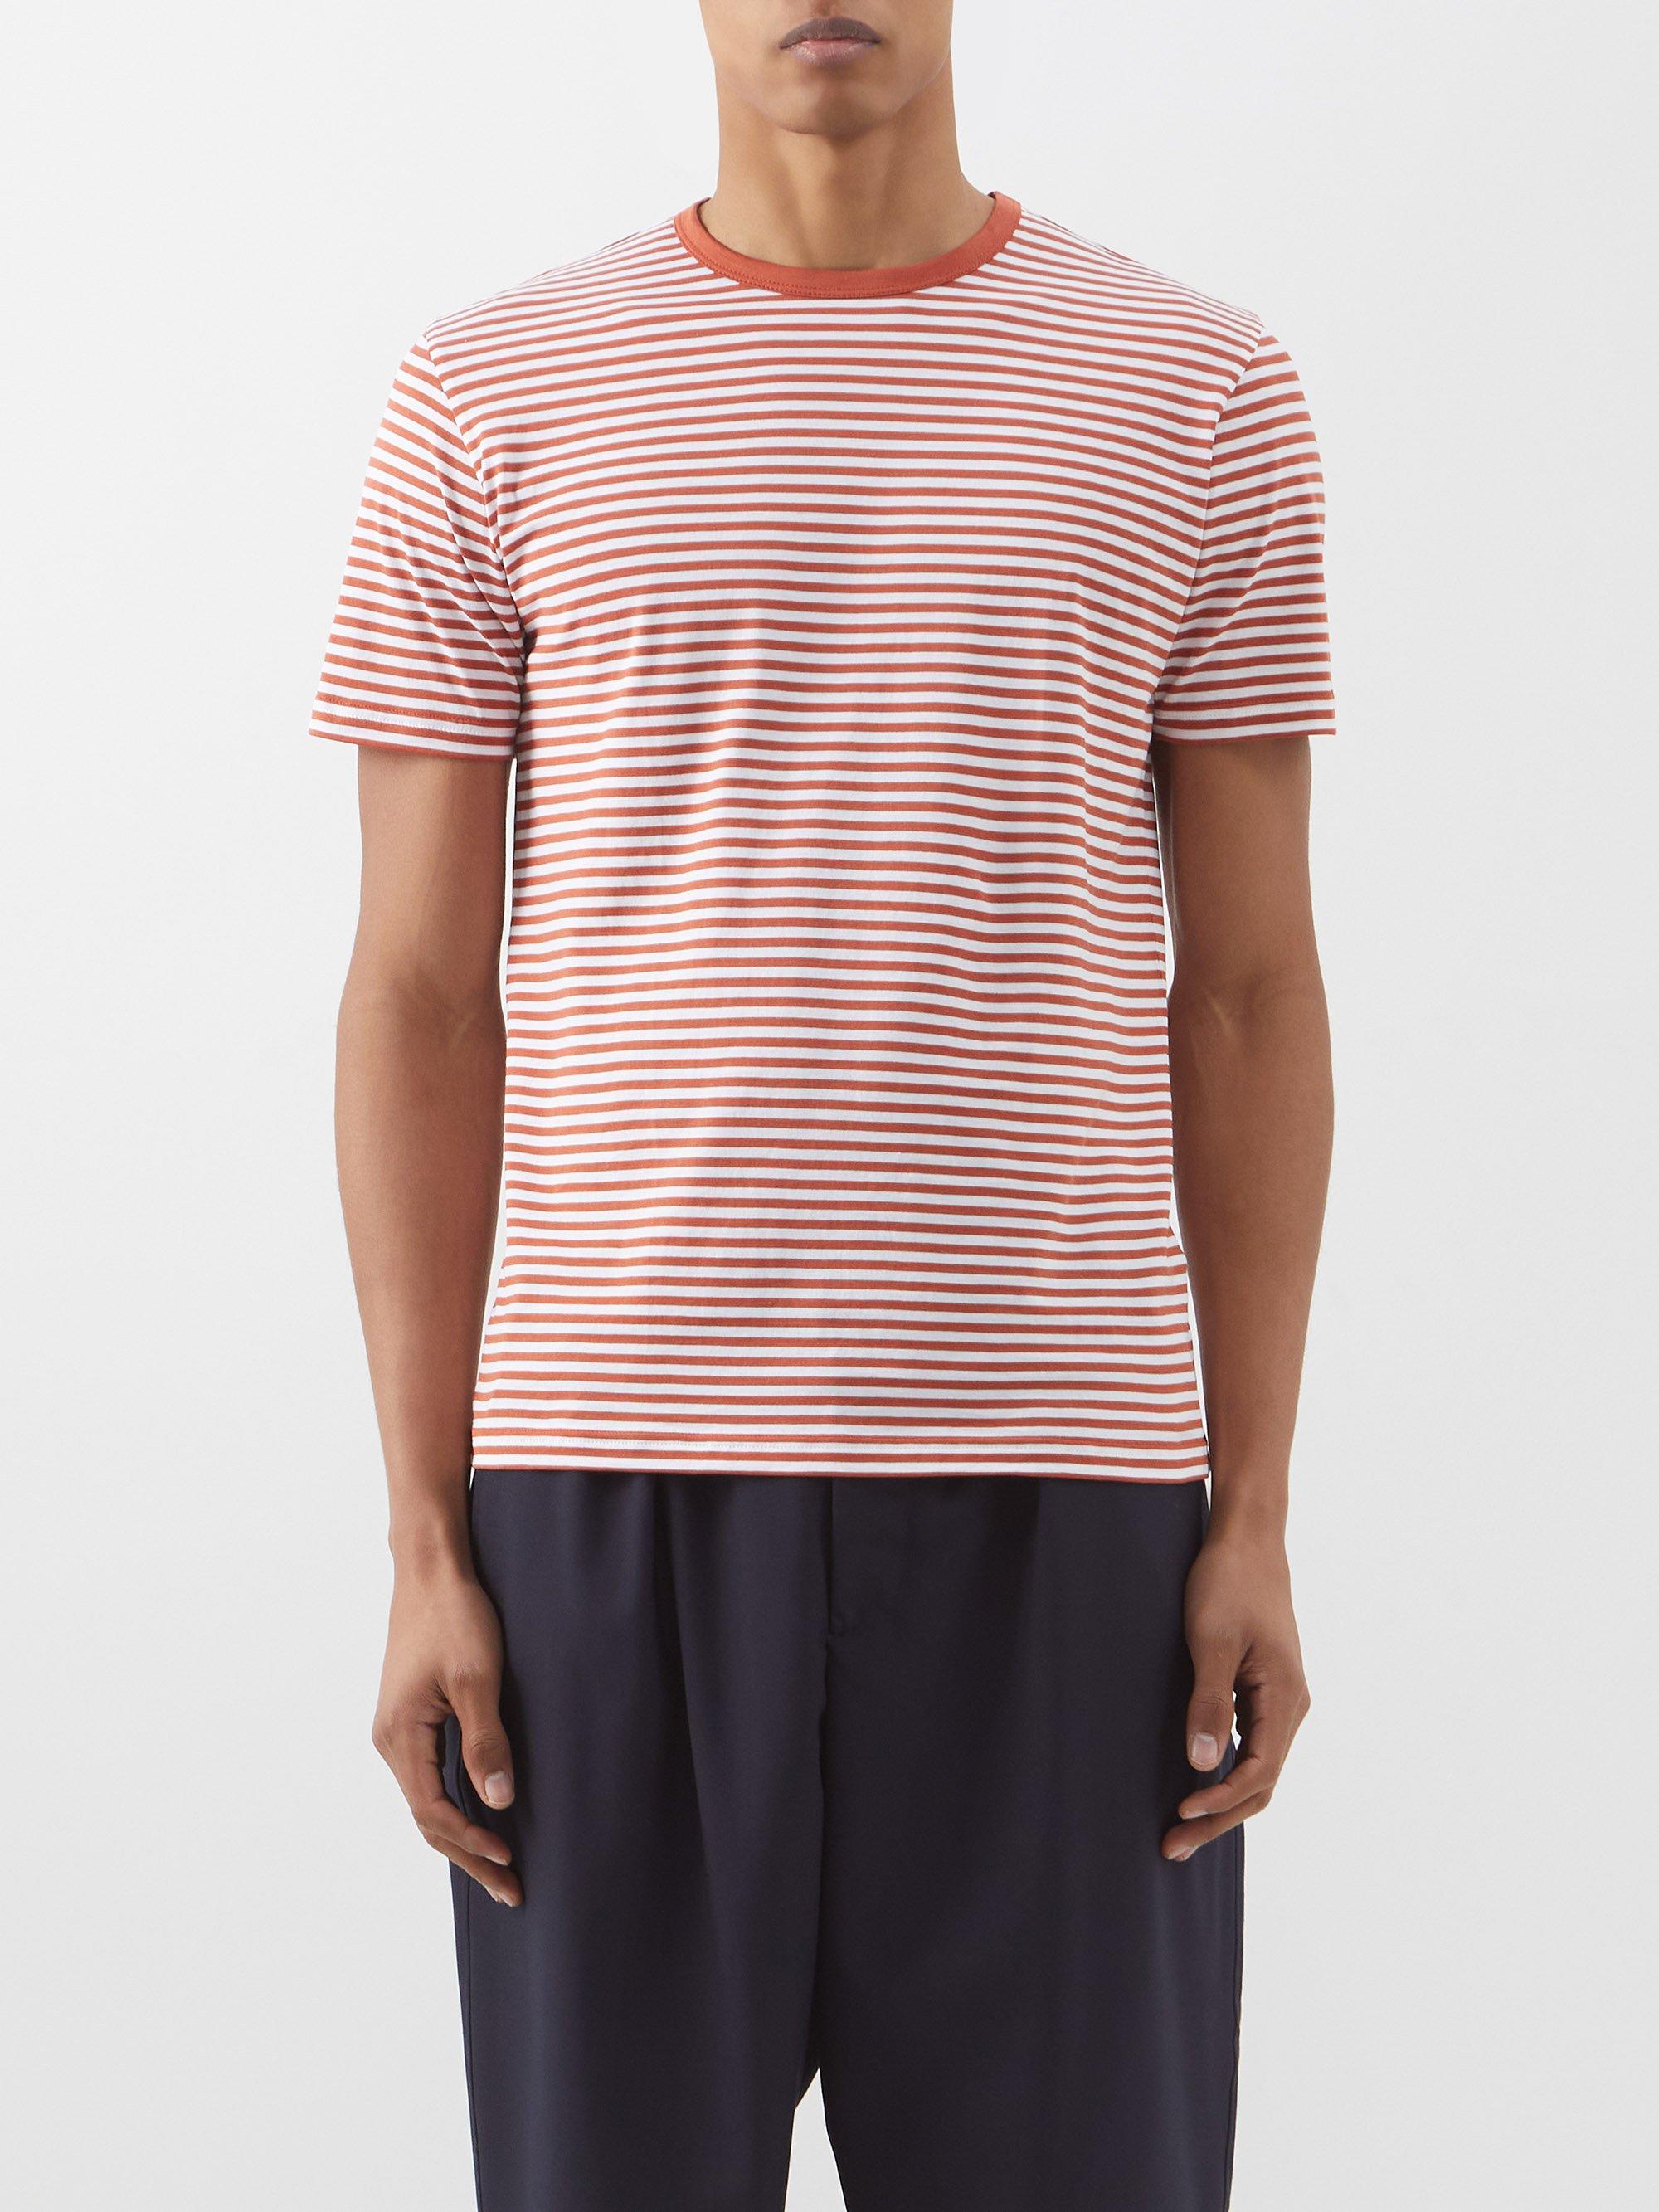 Sunspel Striped Cotton-jersey T-shirt in Pink for Men | Lyst